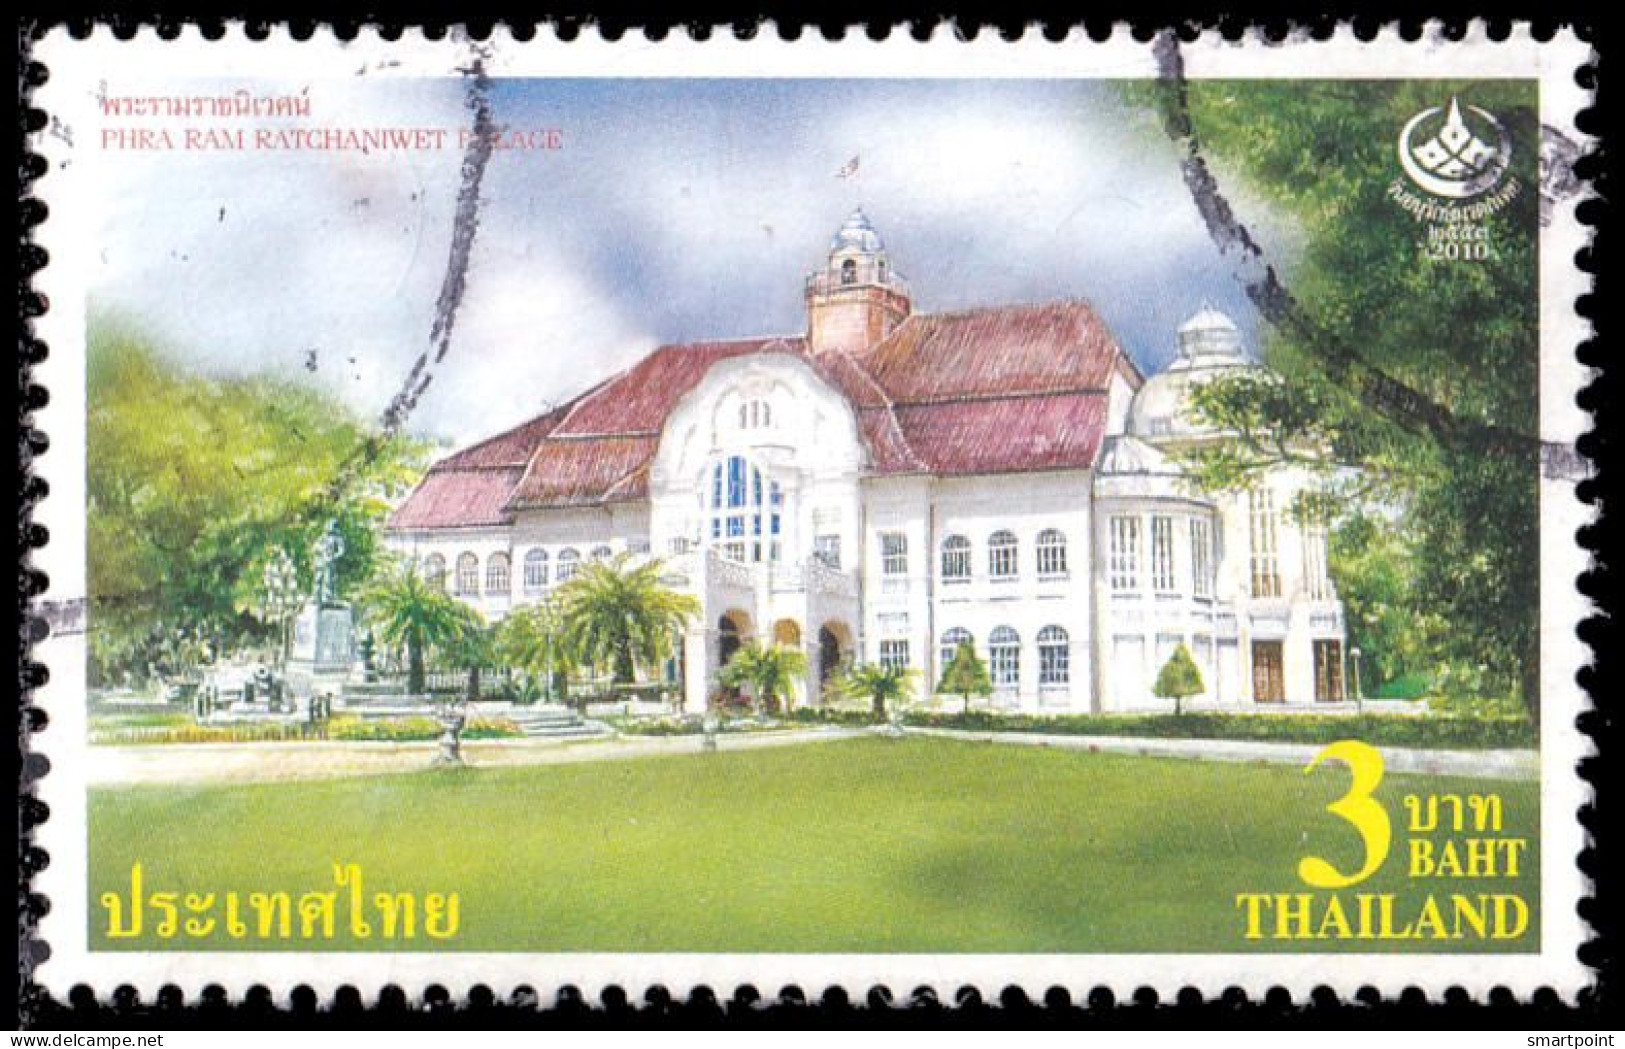 Thailand Stamp 2010 Thai Heritage Conservation Day 3 Baht - Used - Thaïlande